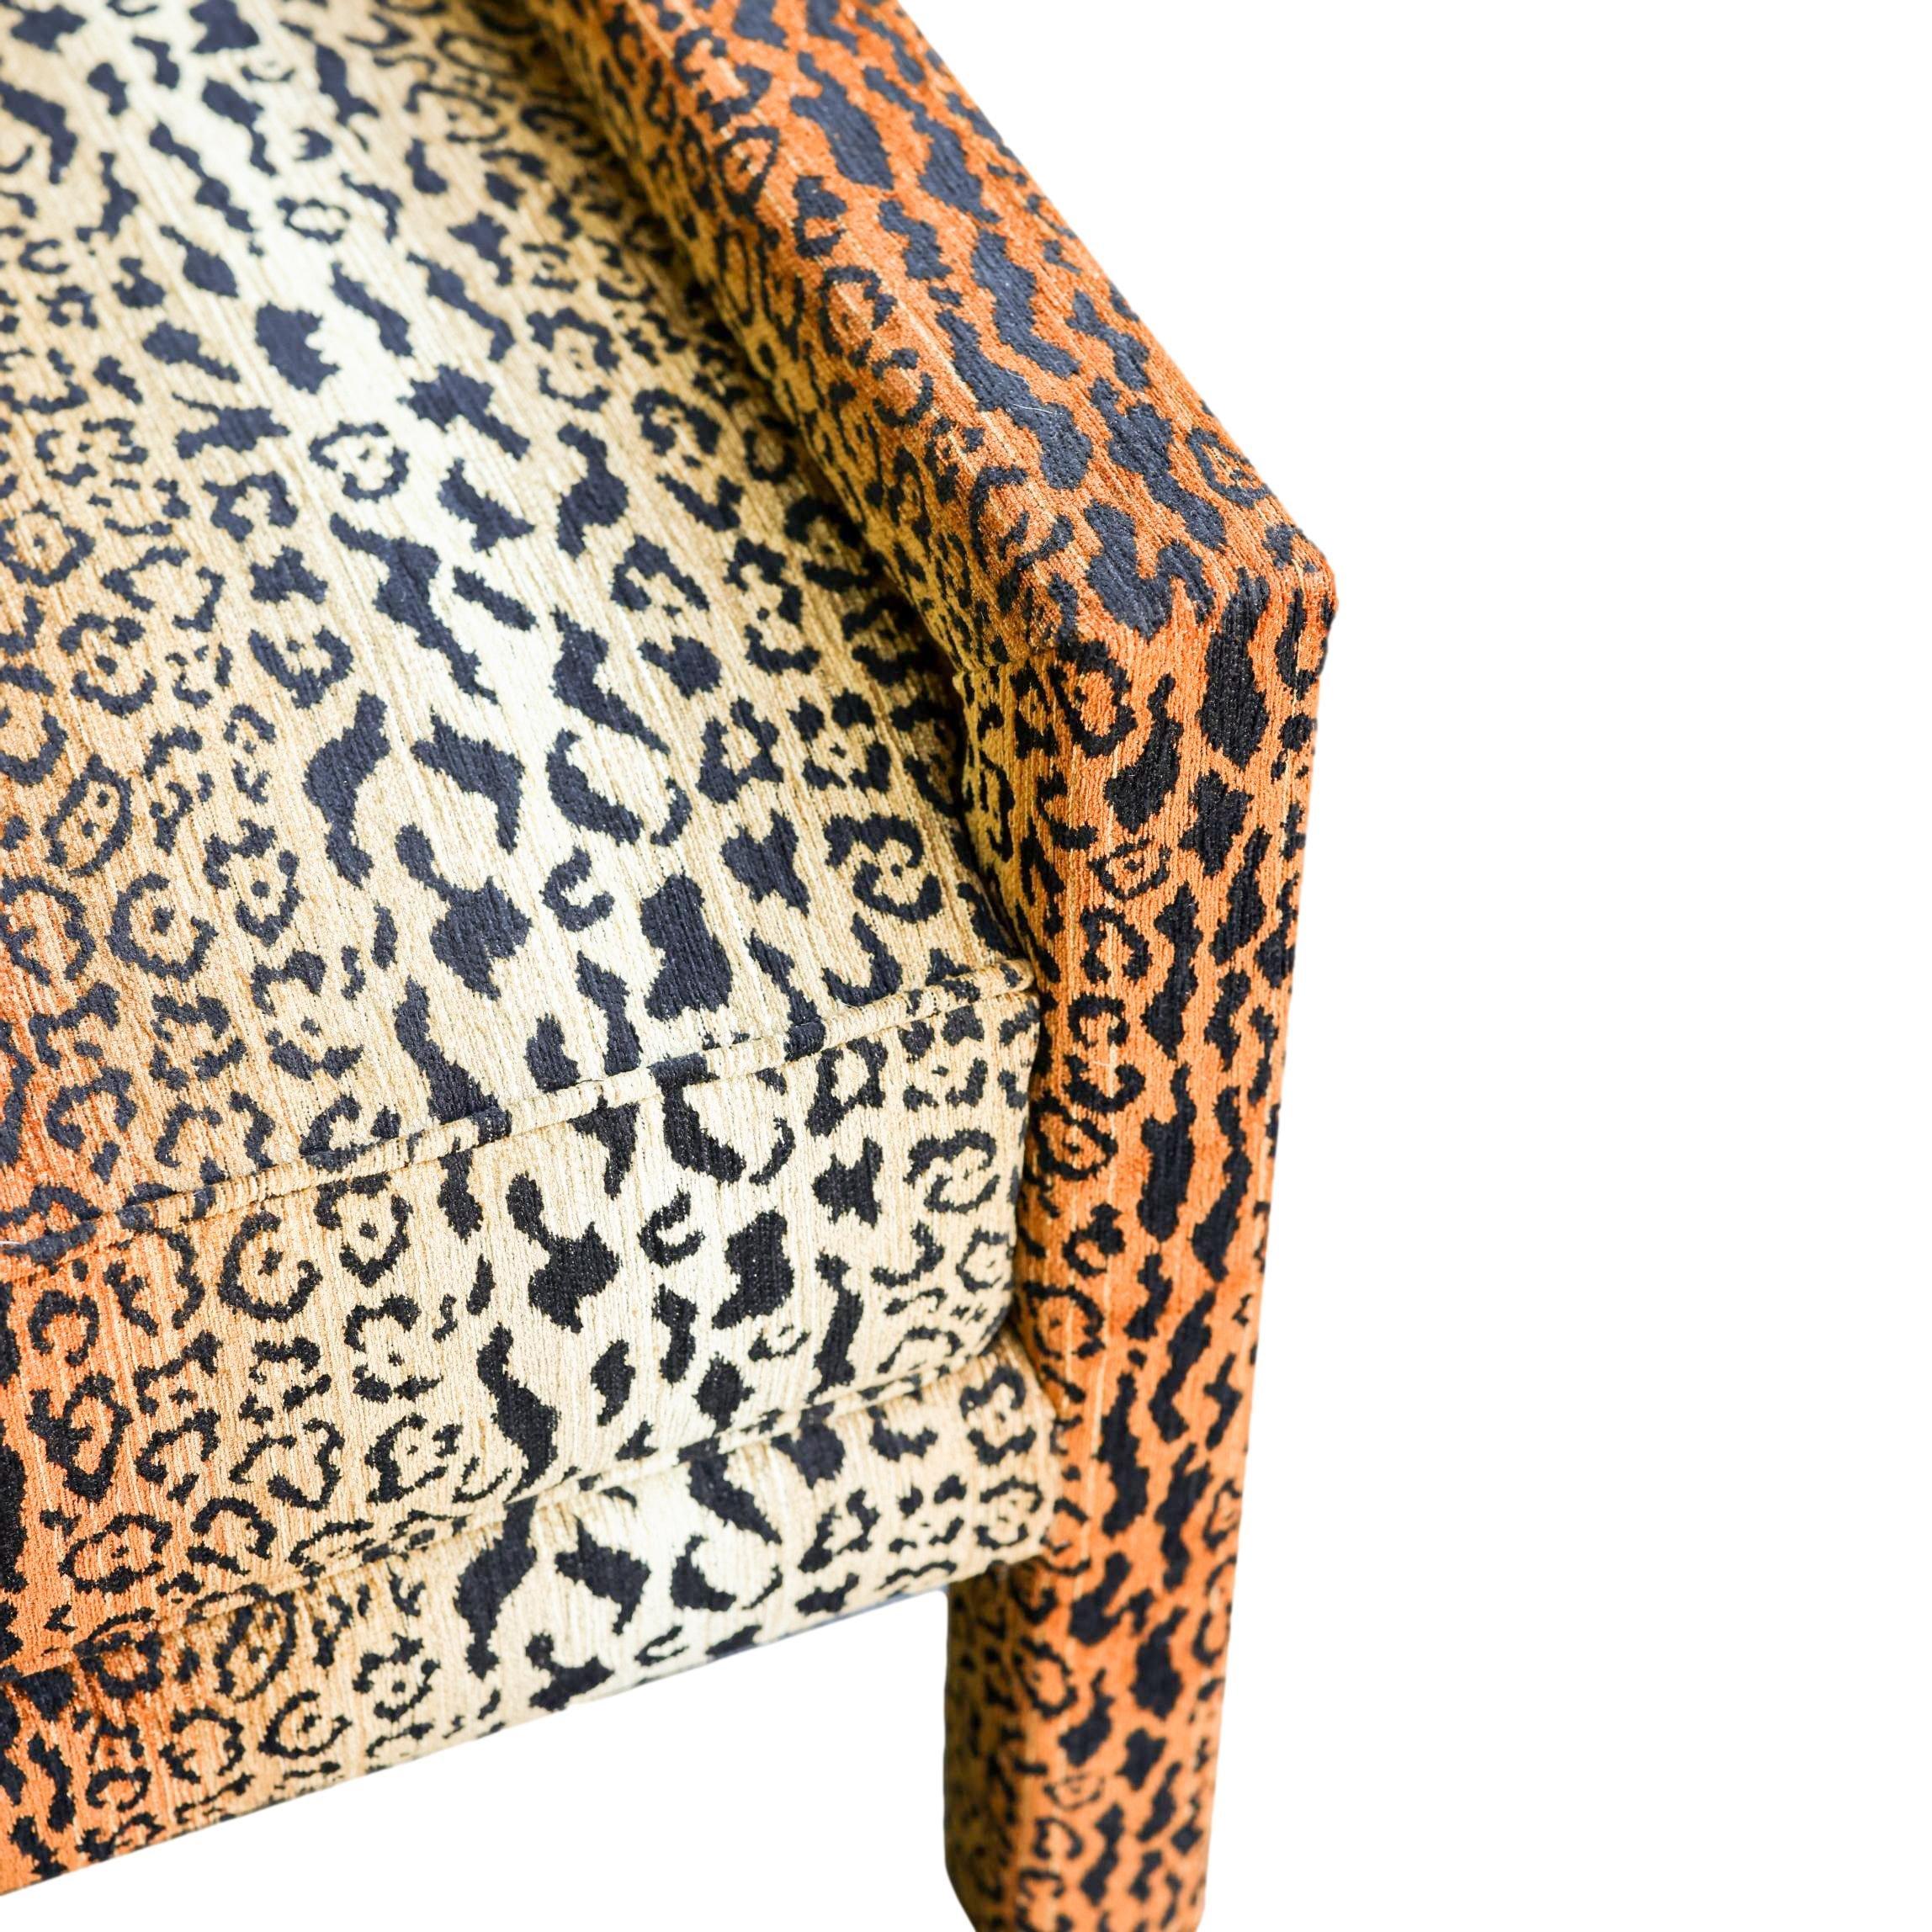 Mid-Century Modern A New Milo Baughman-Style Parsons Chair in Designer Cheetah Velvet For Sale